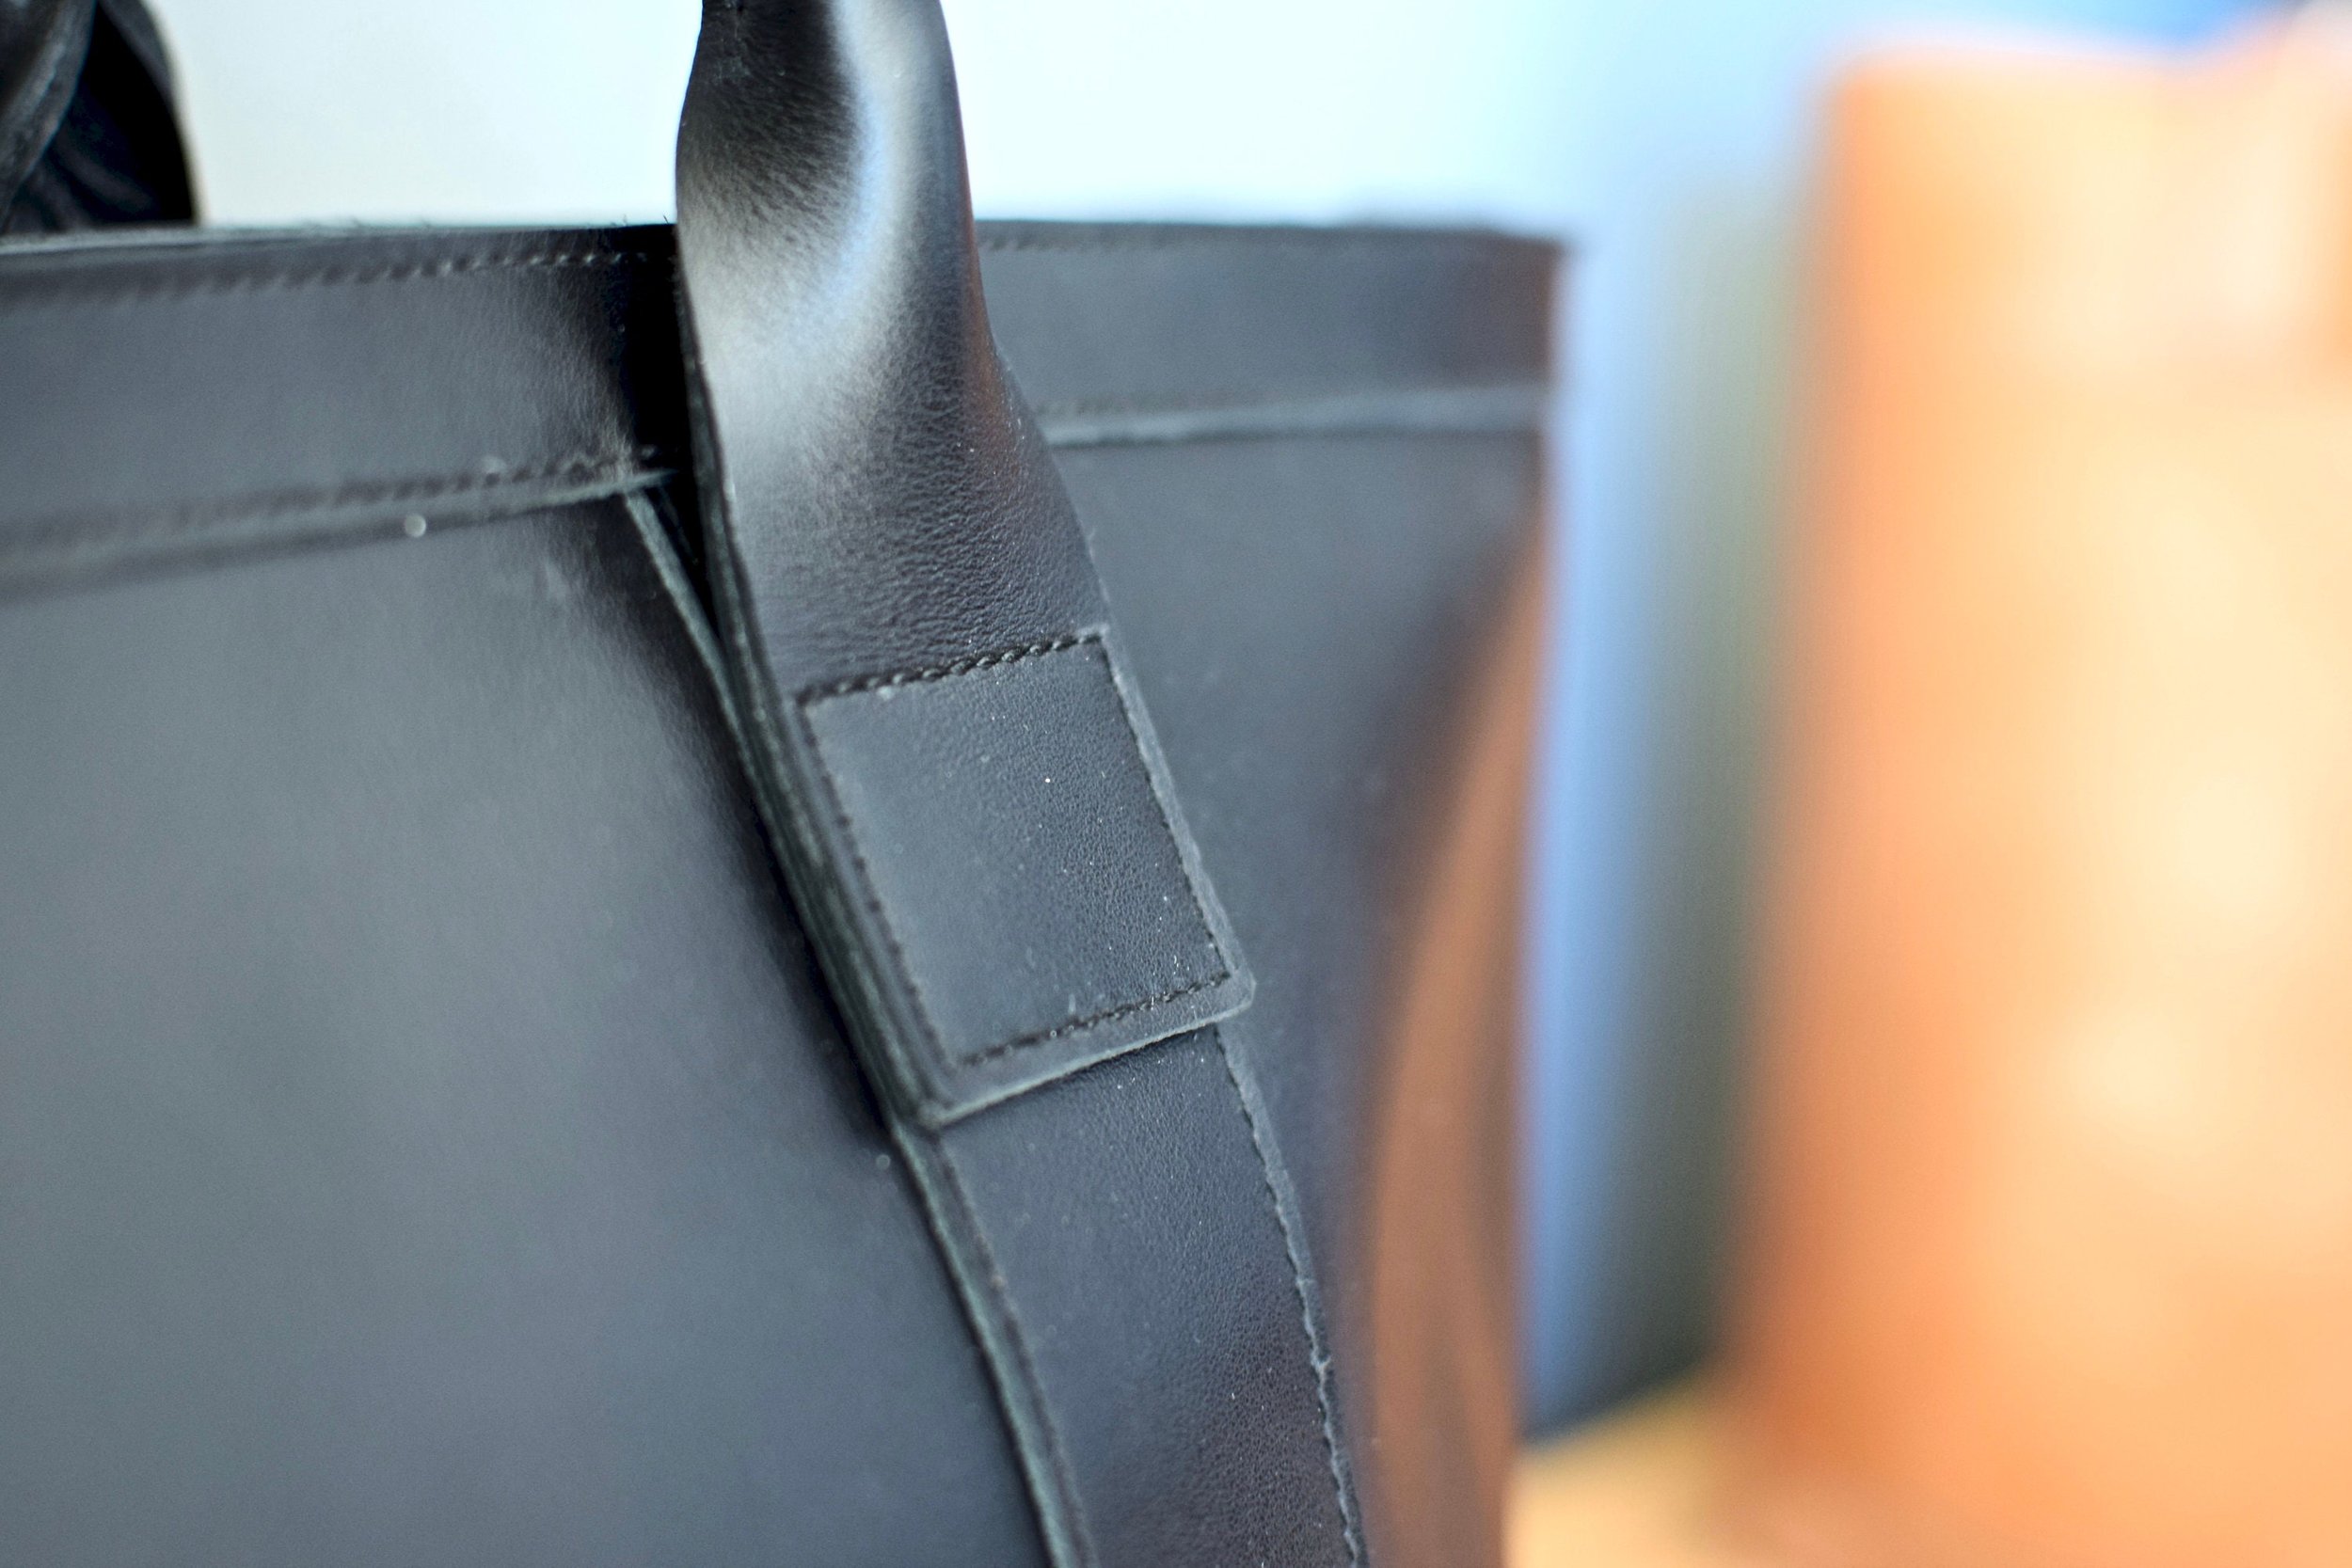 Oversized Tan Leather bag. Rocabruna Bag. — Vermut Atelier